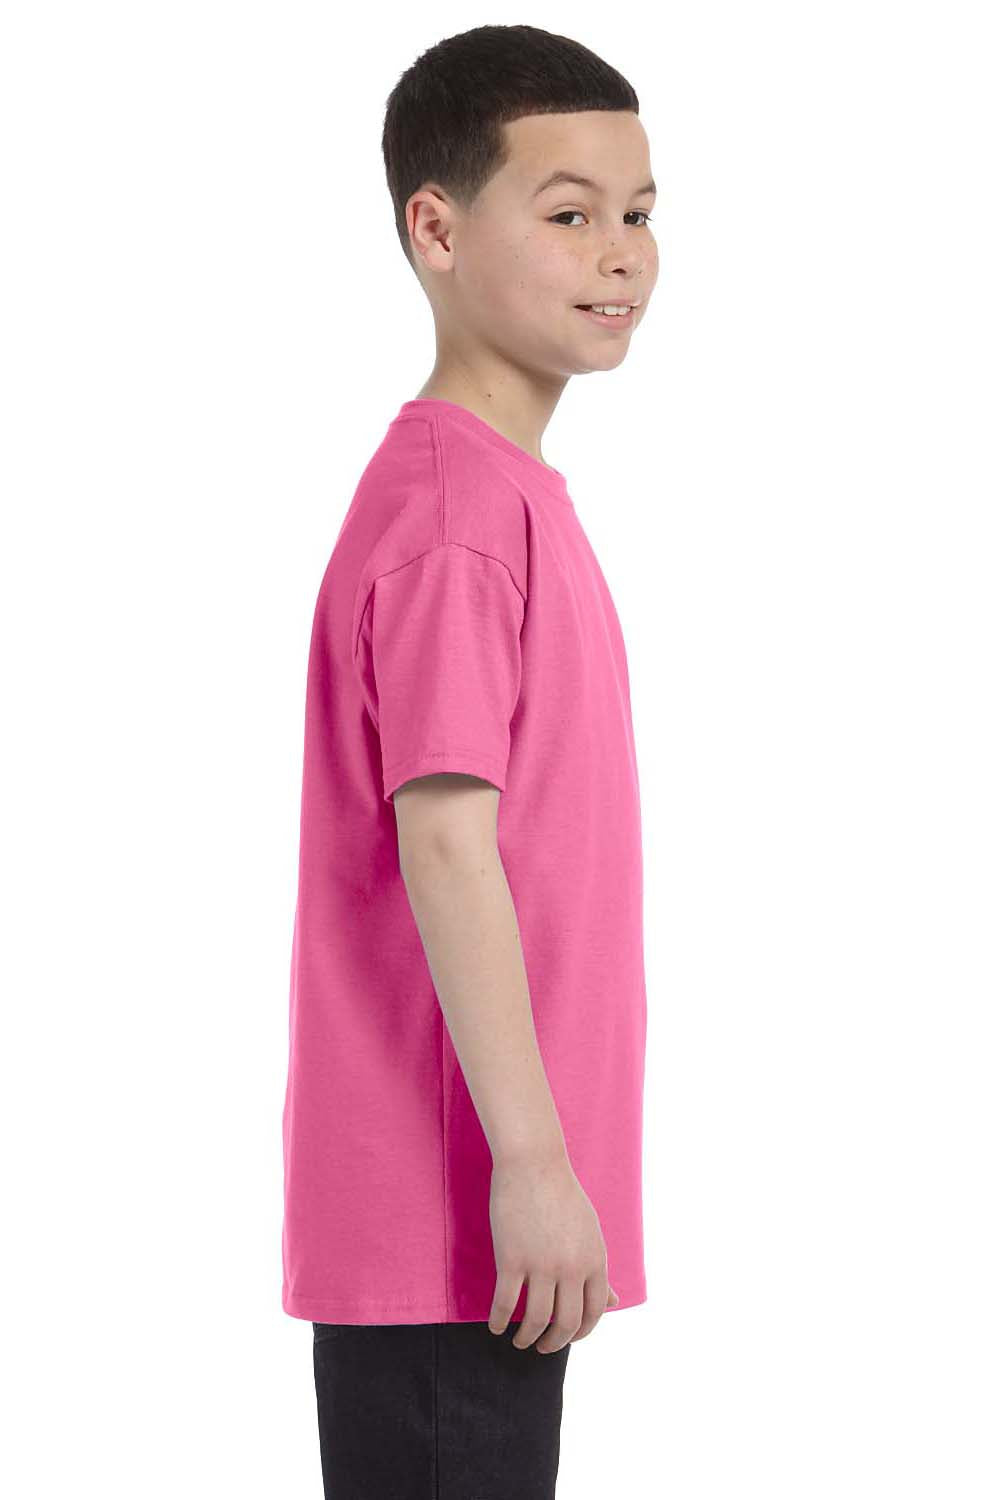 Jerzees 29B Youth Dri-Power Moisture Wicking Short Sleeve Crewneck T-Shirt Neon Pink Side